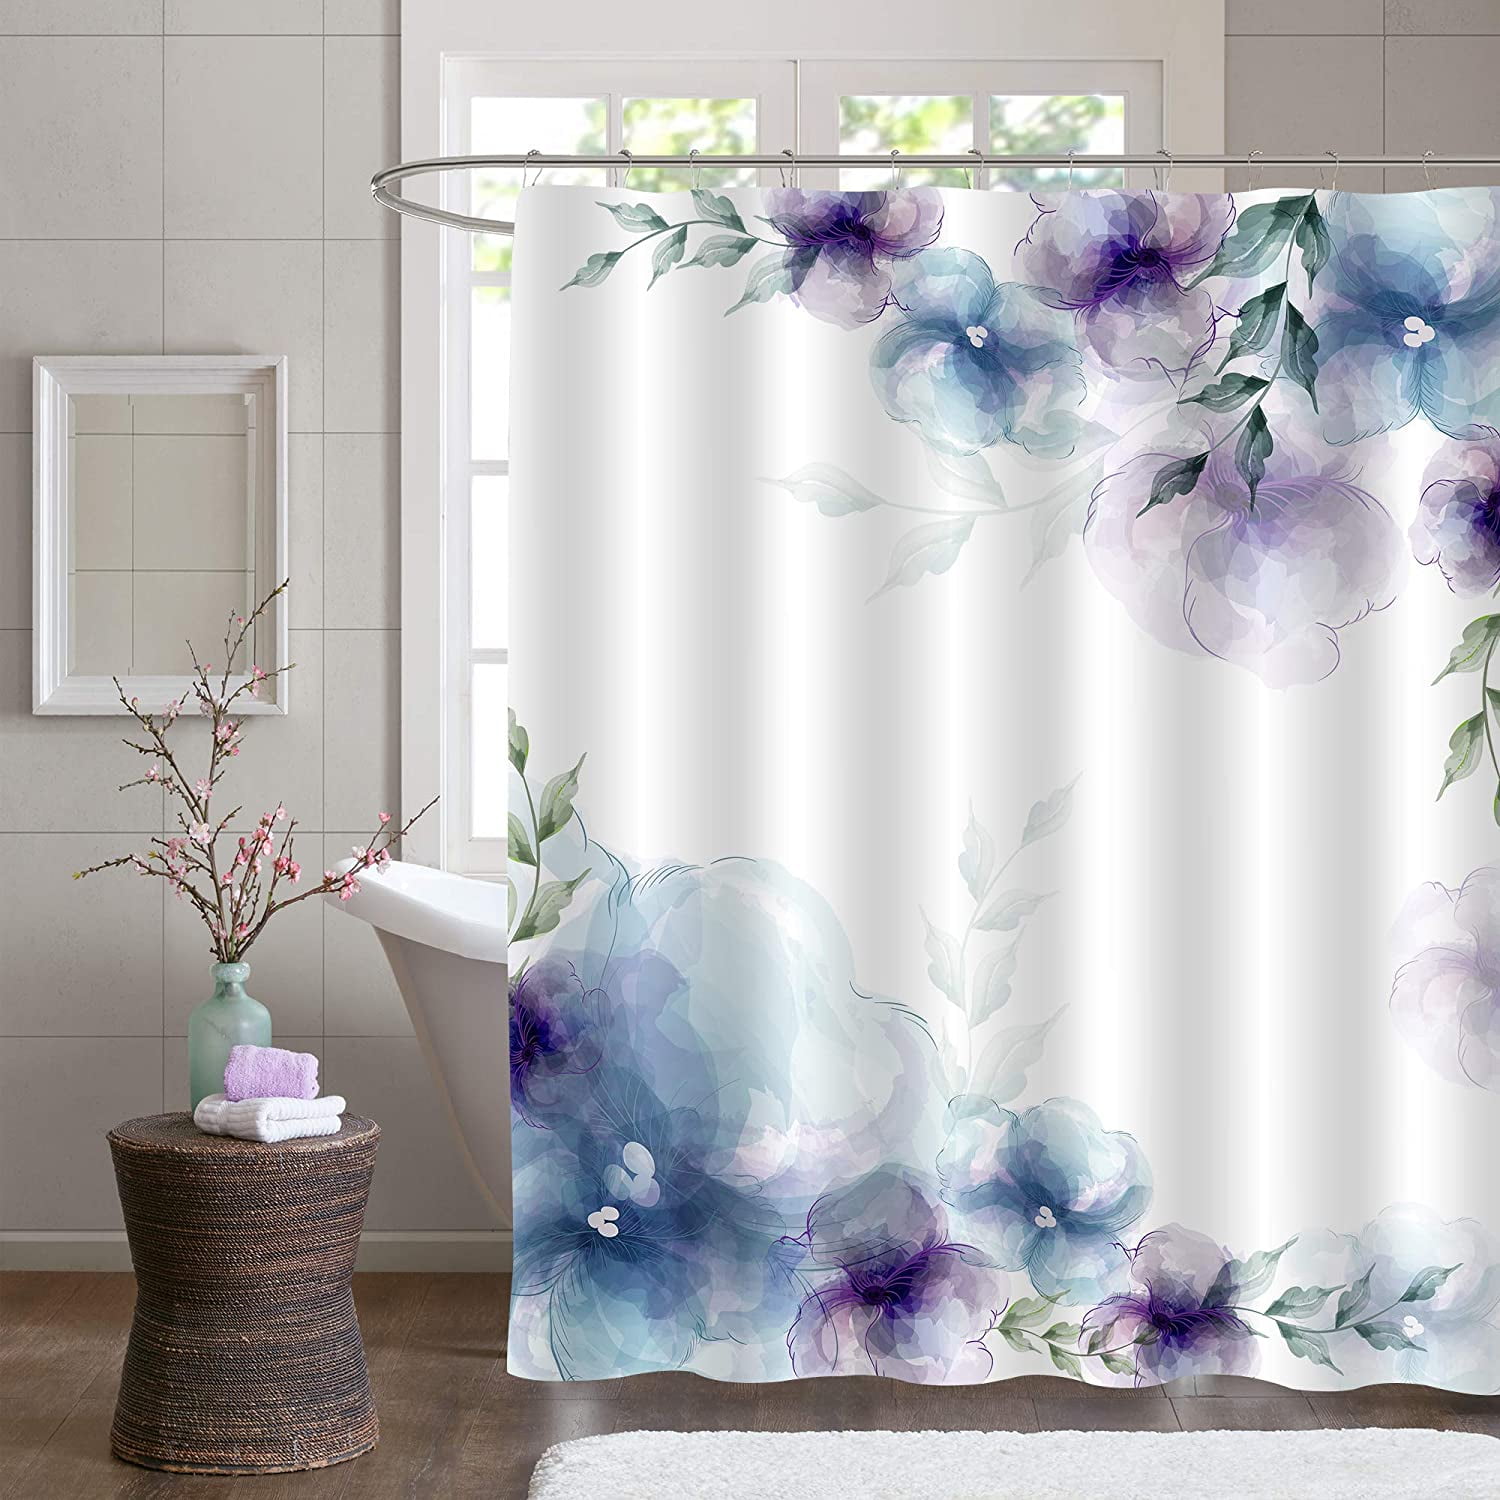 Summer Watercolor Floral Shower Curtain Waterproof Fabric Bathroom Accessories 